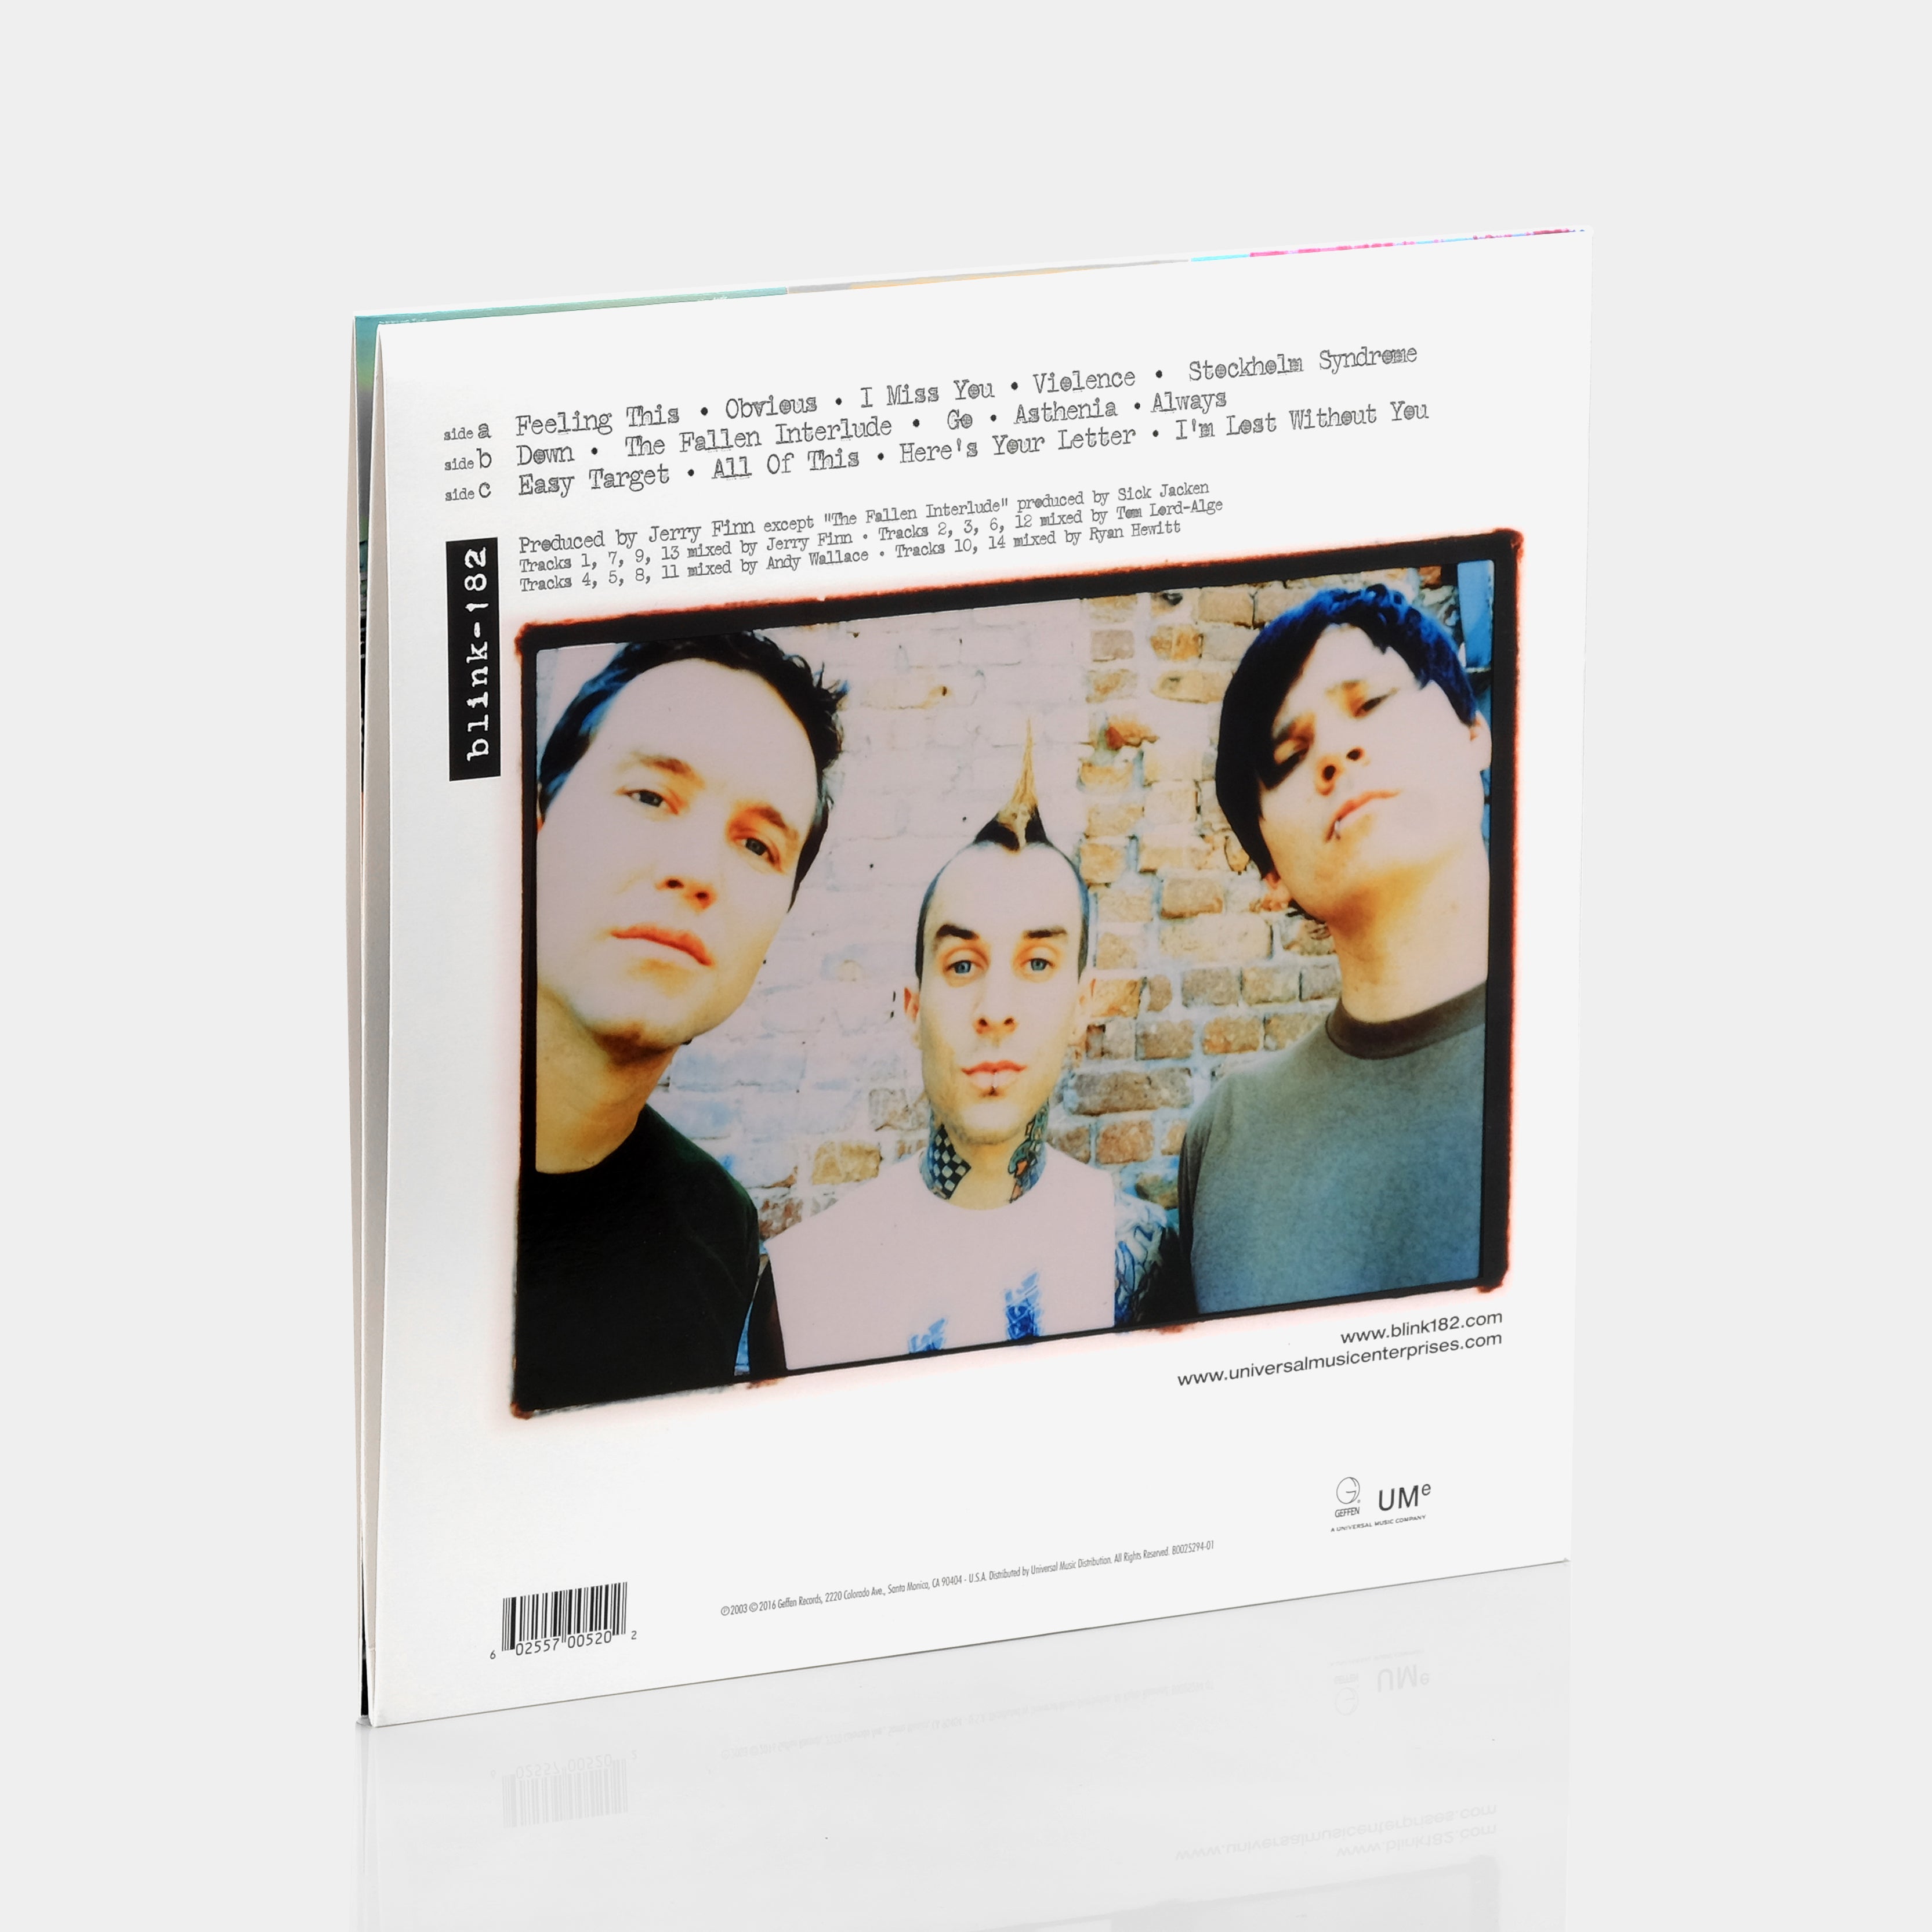 Blink-182 - Blink-182 2xLP Vinyl Record